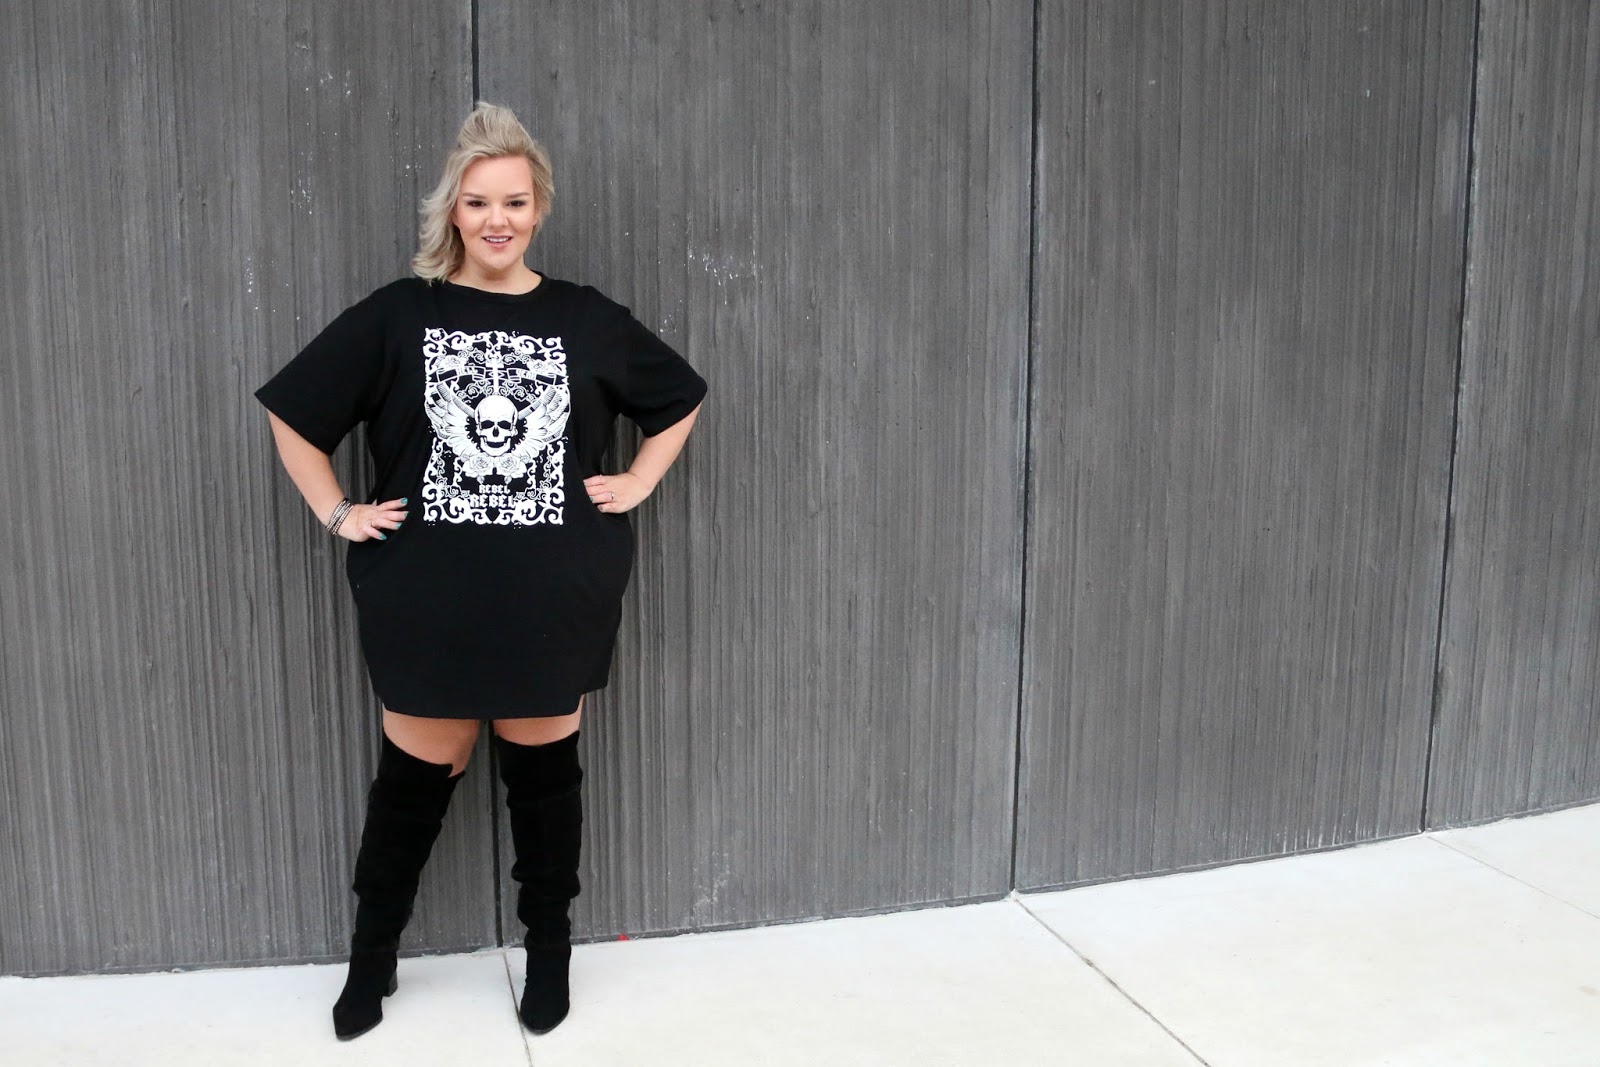 In The Style Curve Charlotte Crosby Black Rebel Rebel Skull Oversized T Shirt Dress on plus size blogger whatlauraloves